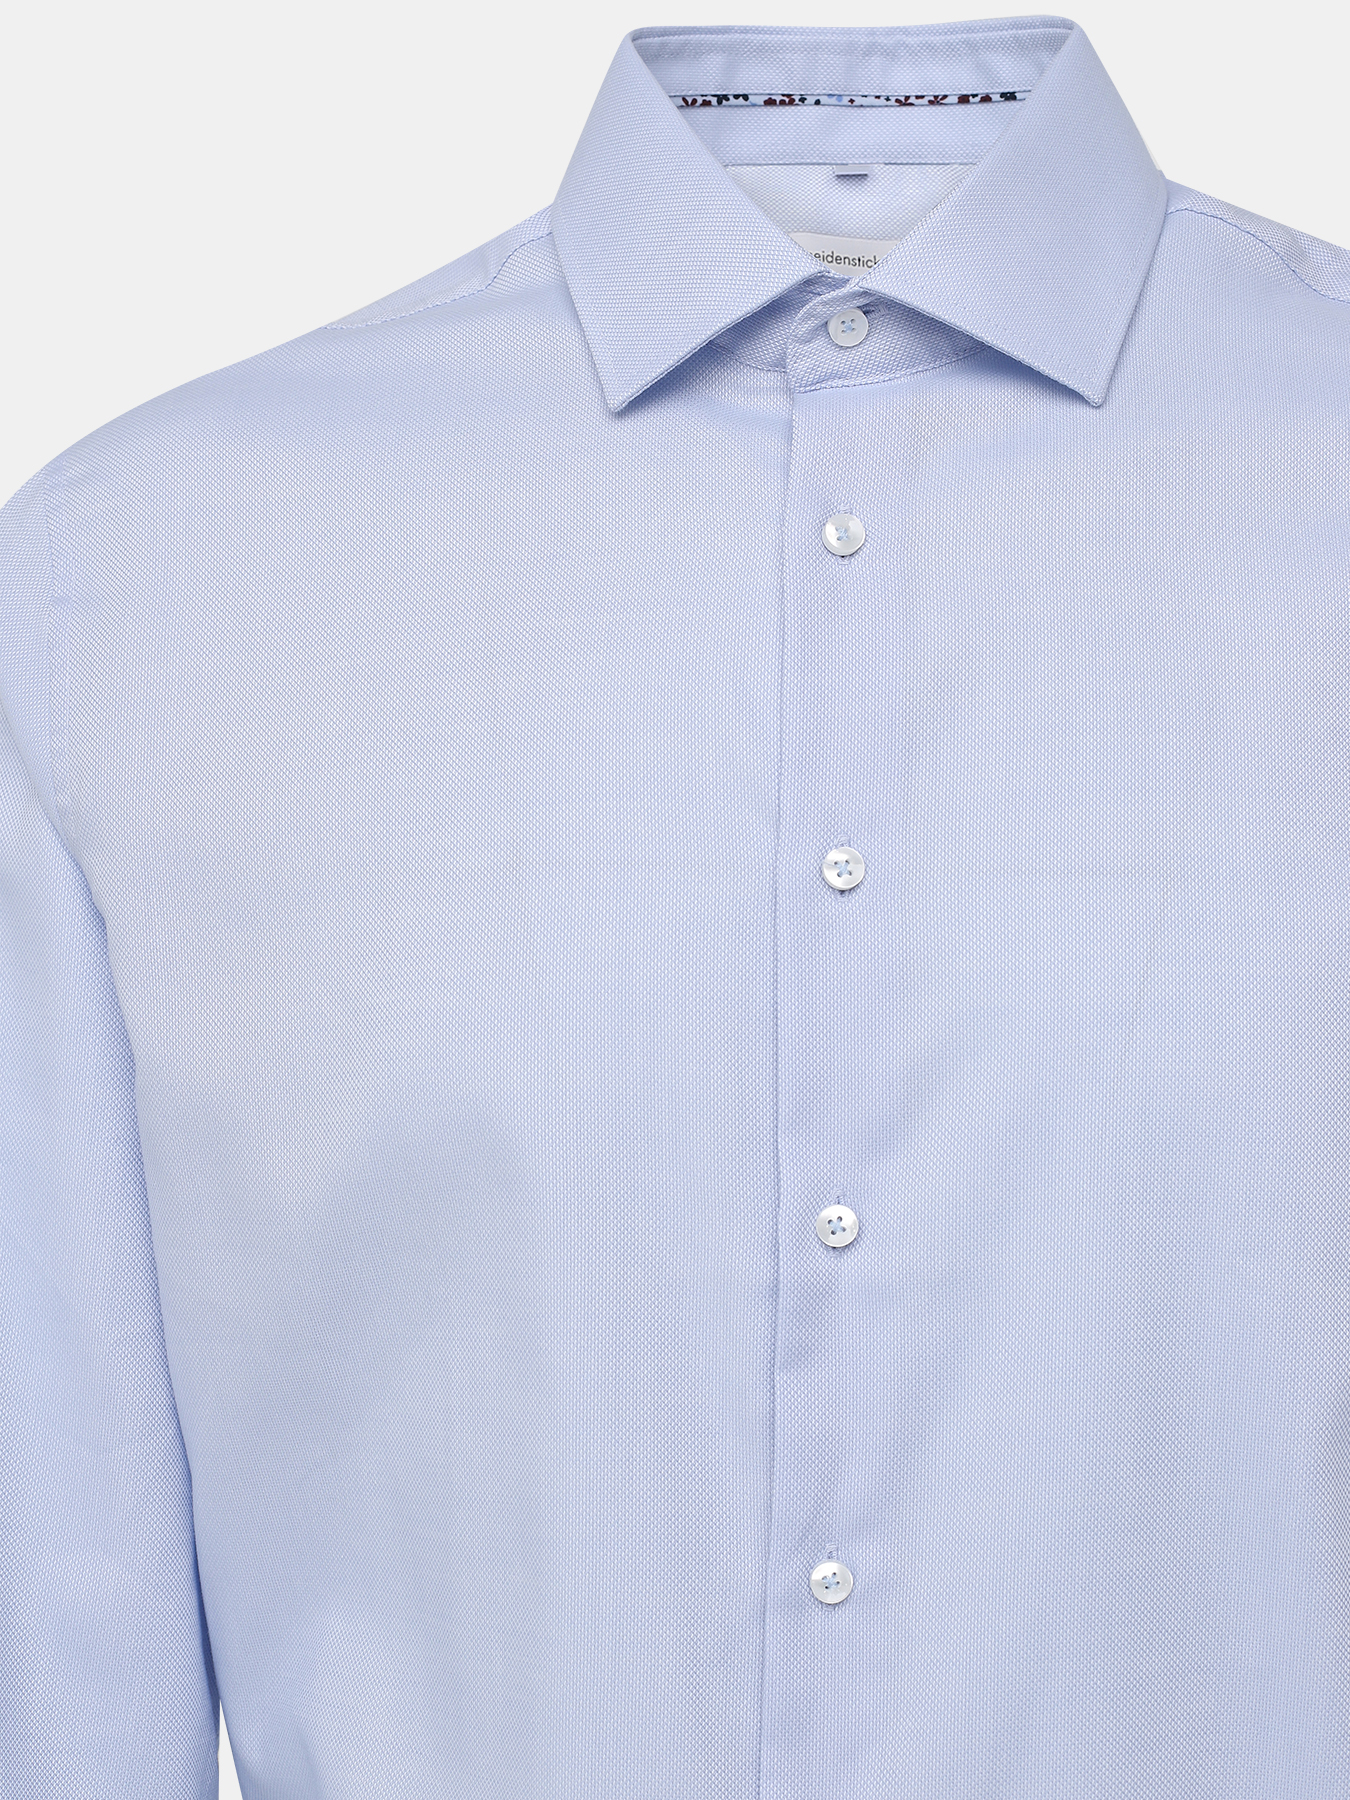 Рубашка Seidensticker 389117-021, цвет голубой, размер 50 - фото 3